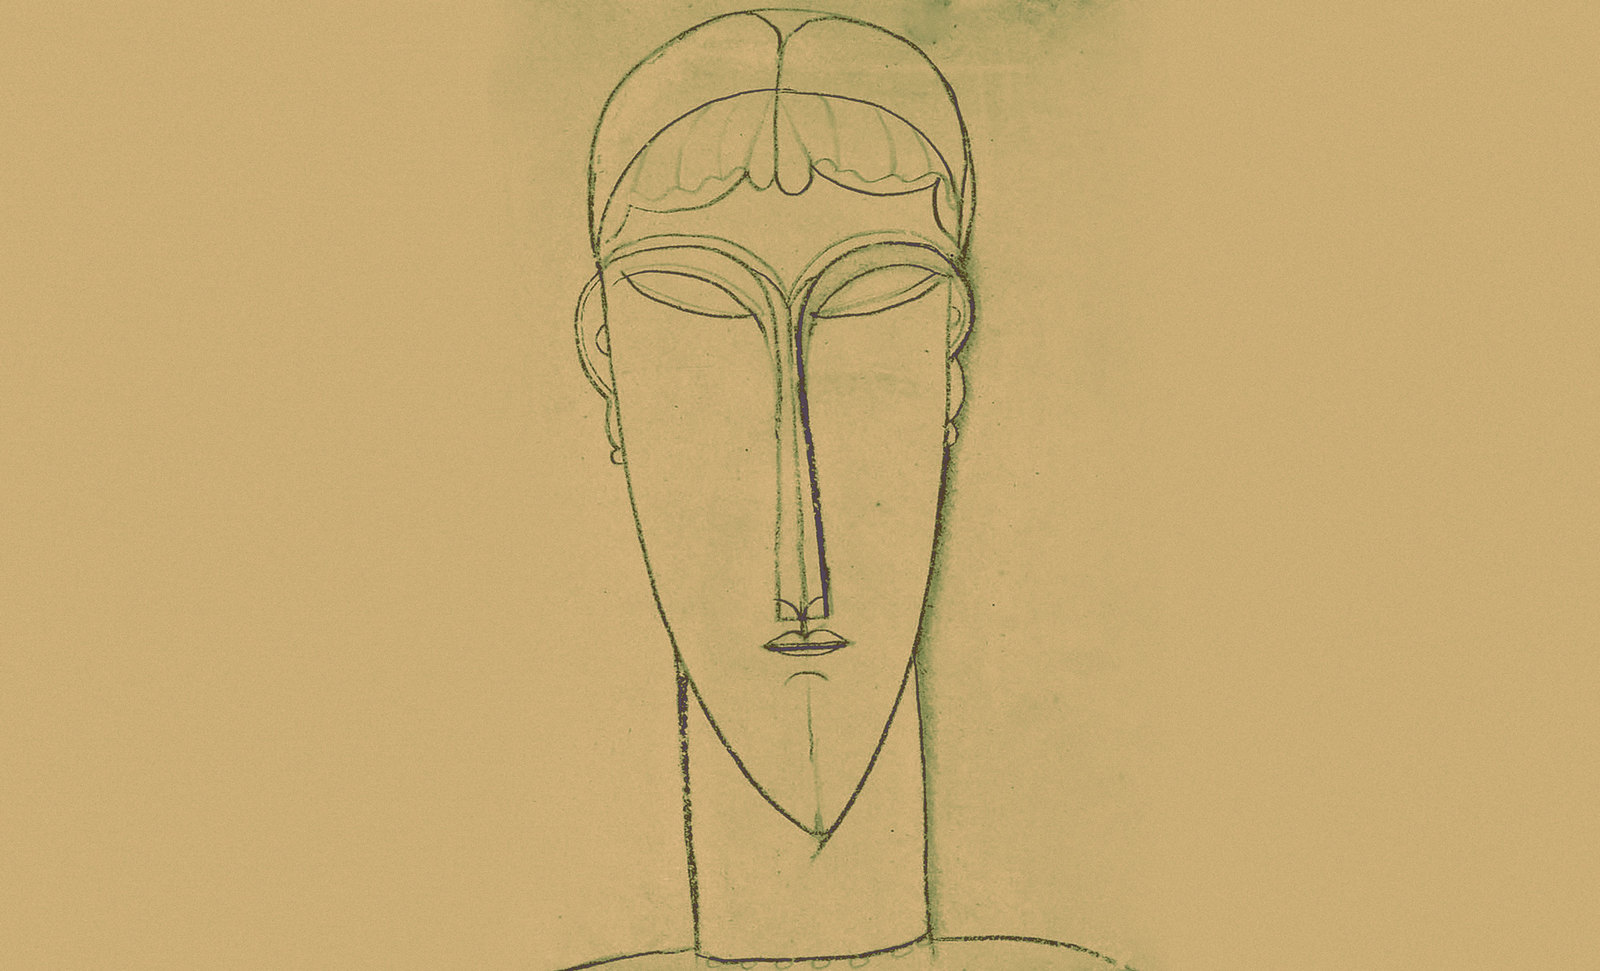 Amadeo Modigliani